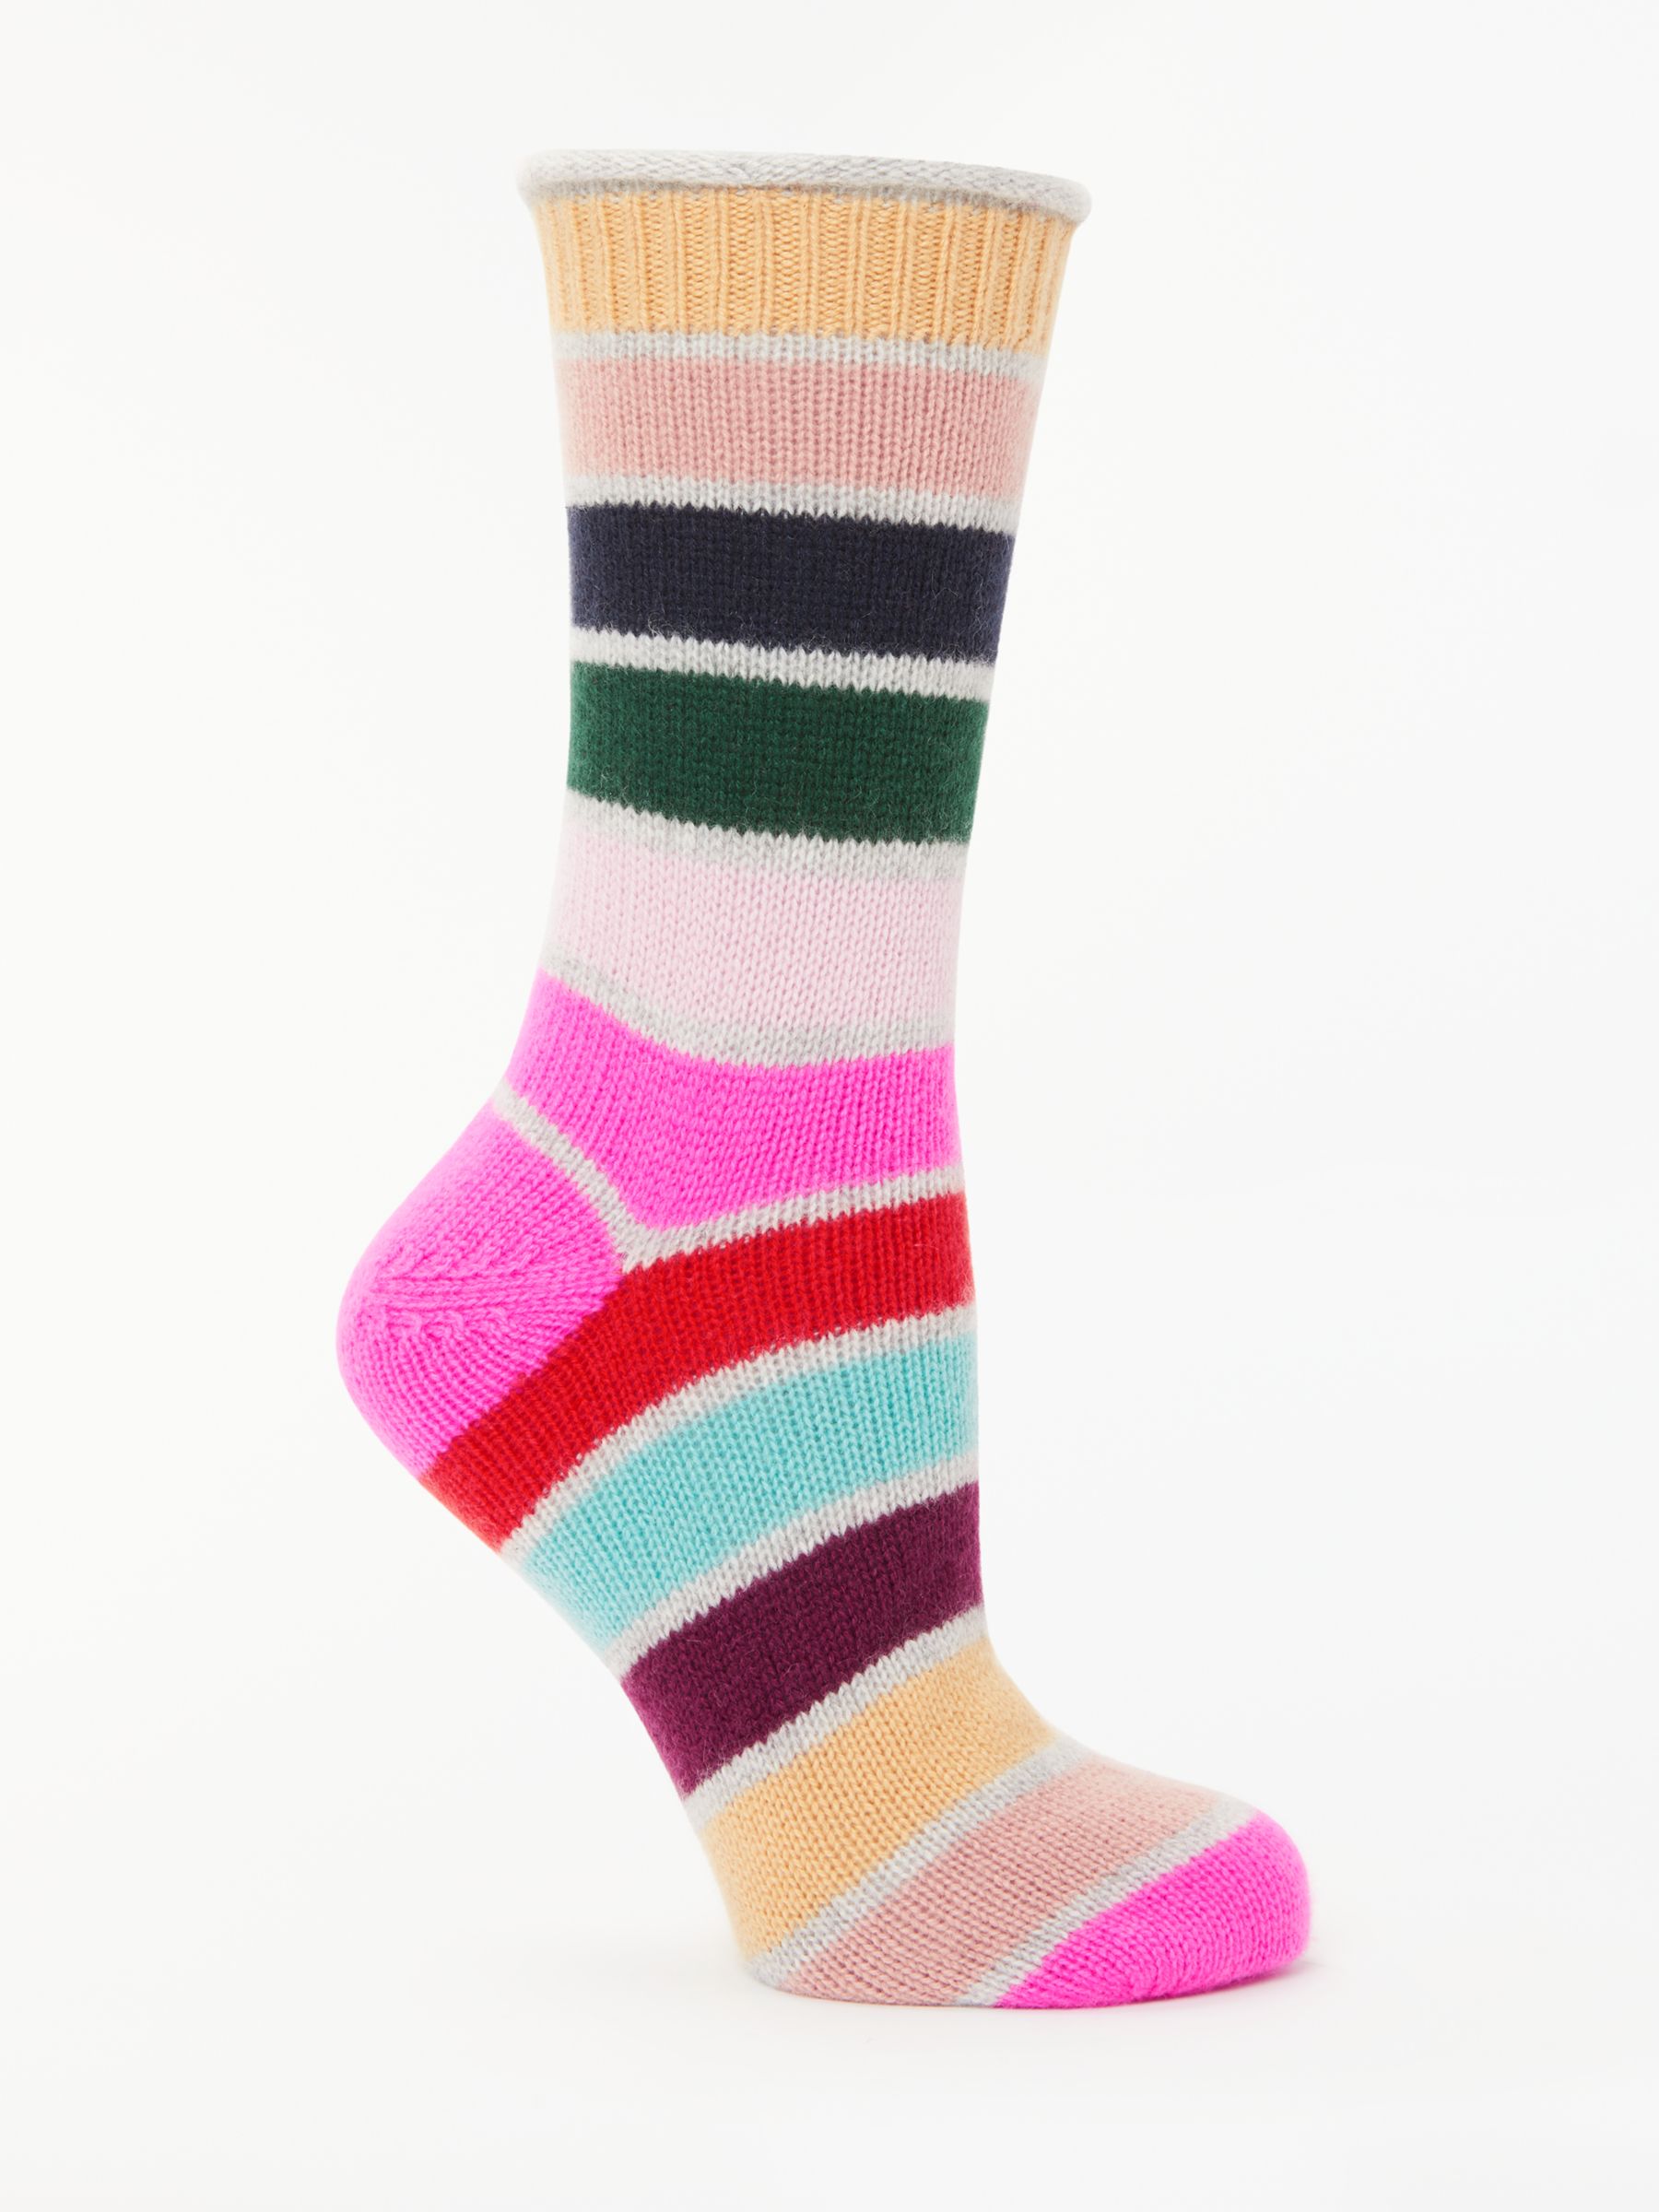 Boden Stripe Cashmere Ankle Socks, Multi Stripe at John Lewis & Partners